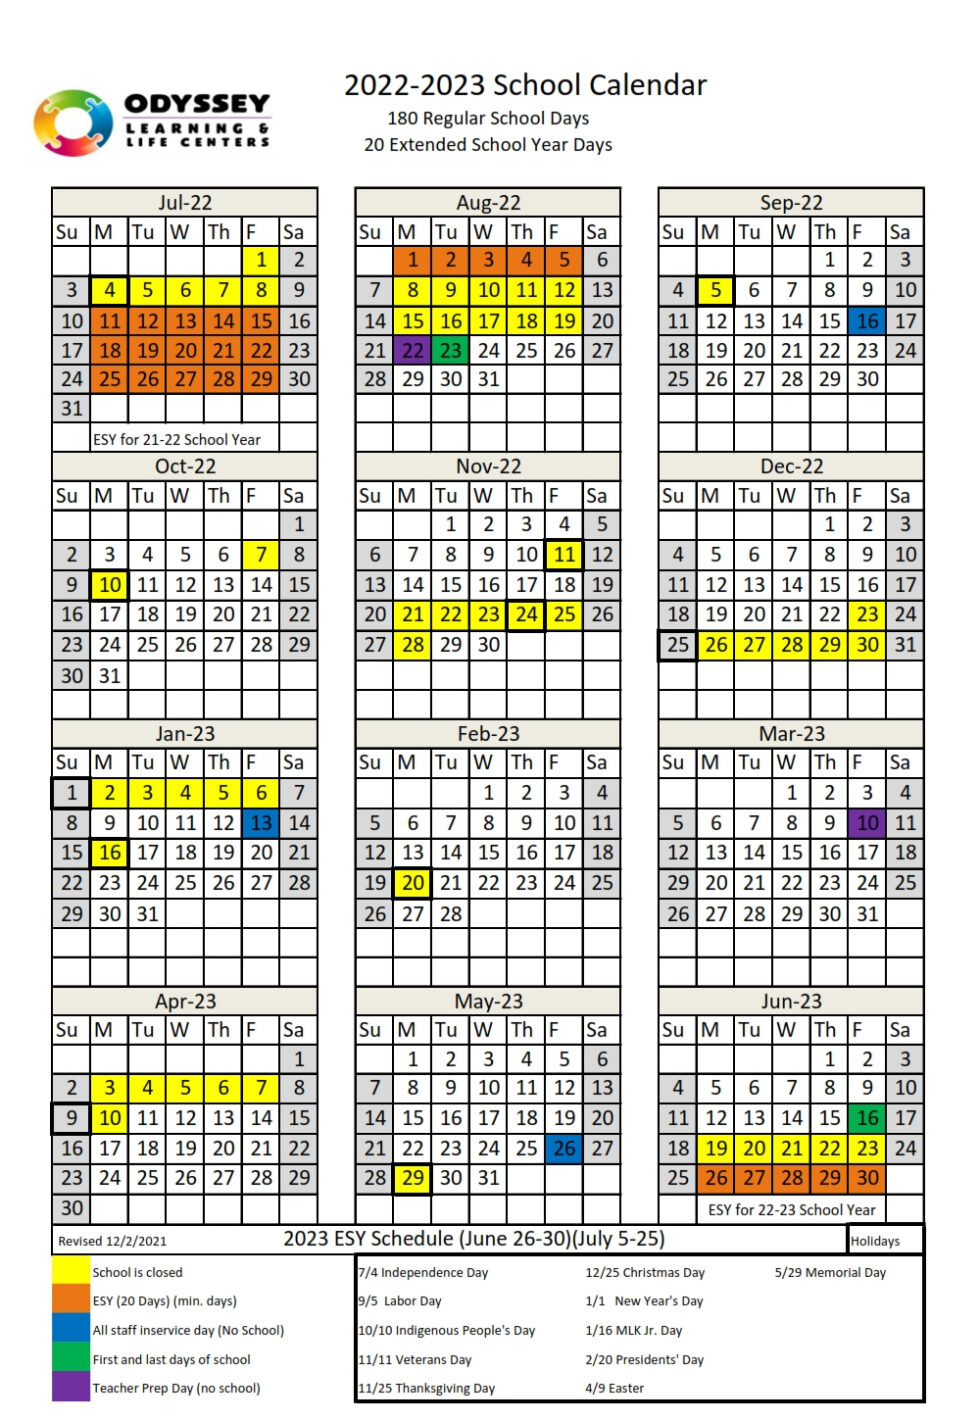 annual-school-calendar-for-odyssey-learning-center